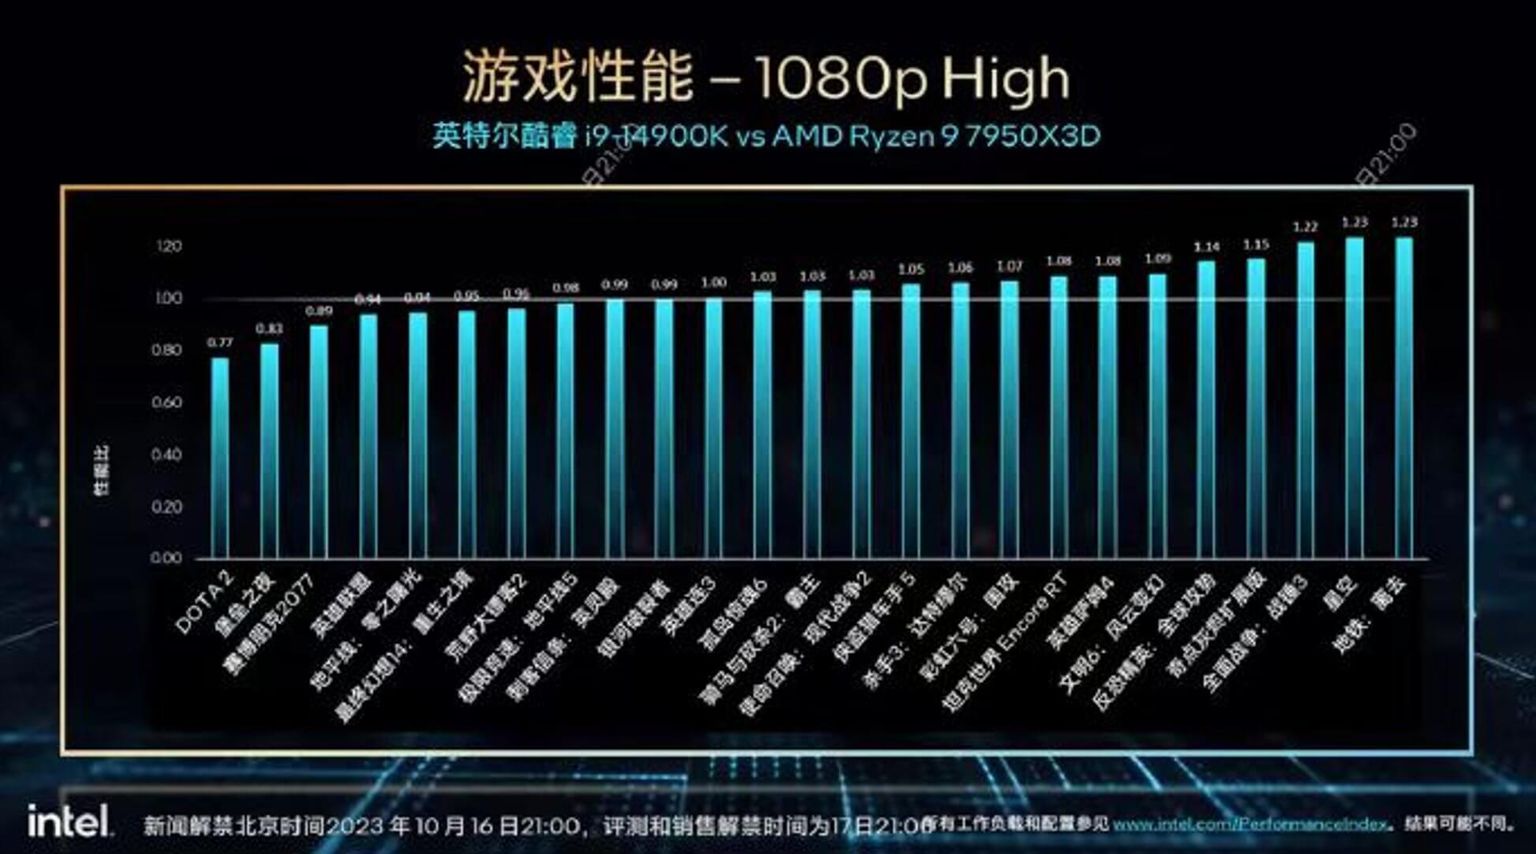 Intel’s i9-14900K: Merely 2.5% Speedier than AMD Ryzen 7 7800X3D in Gaming